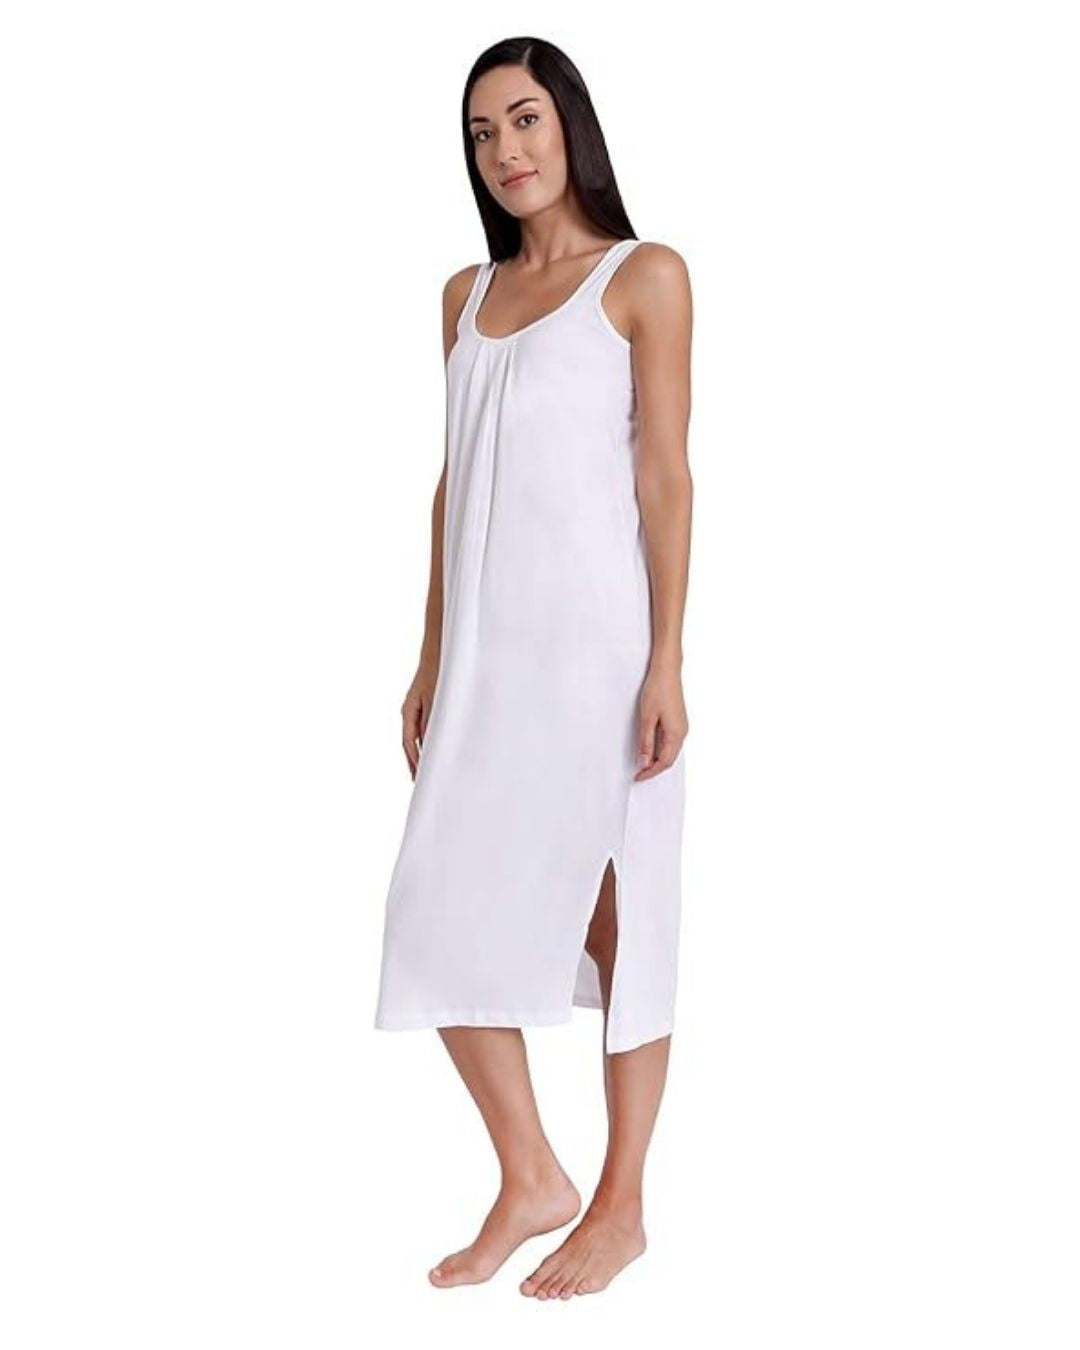 TWGE Cotton Full Length Camisole for Women - Long Innerwear - Color White